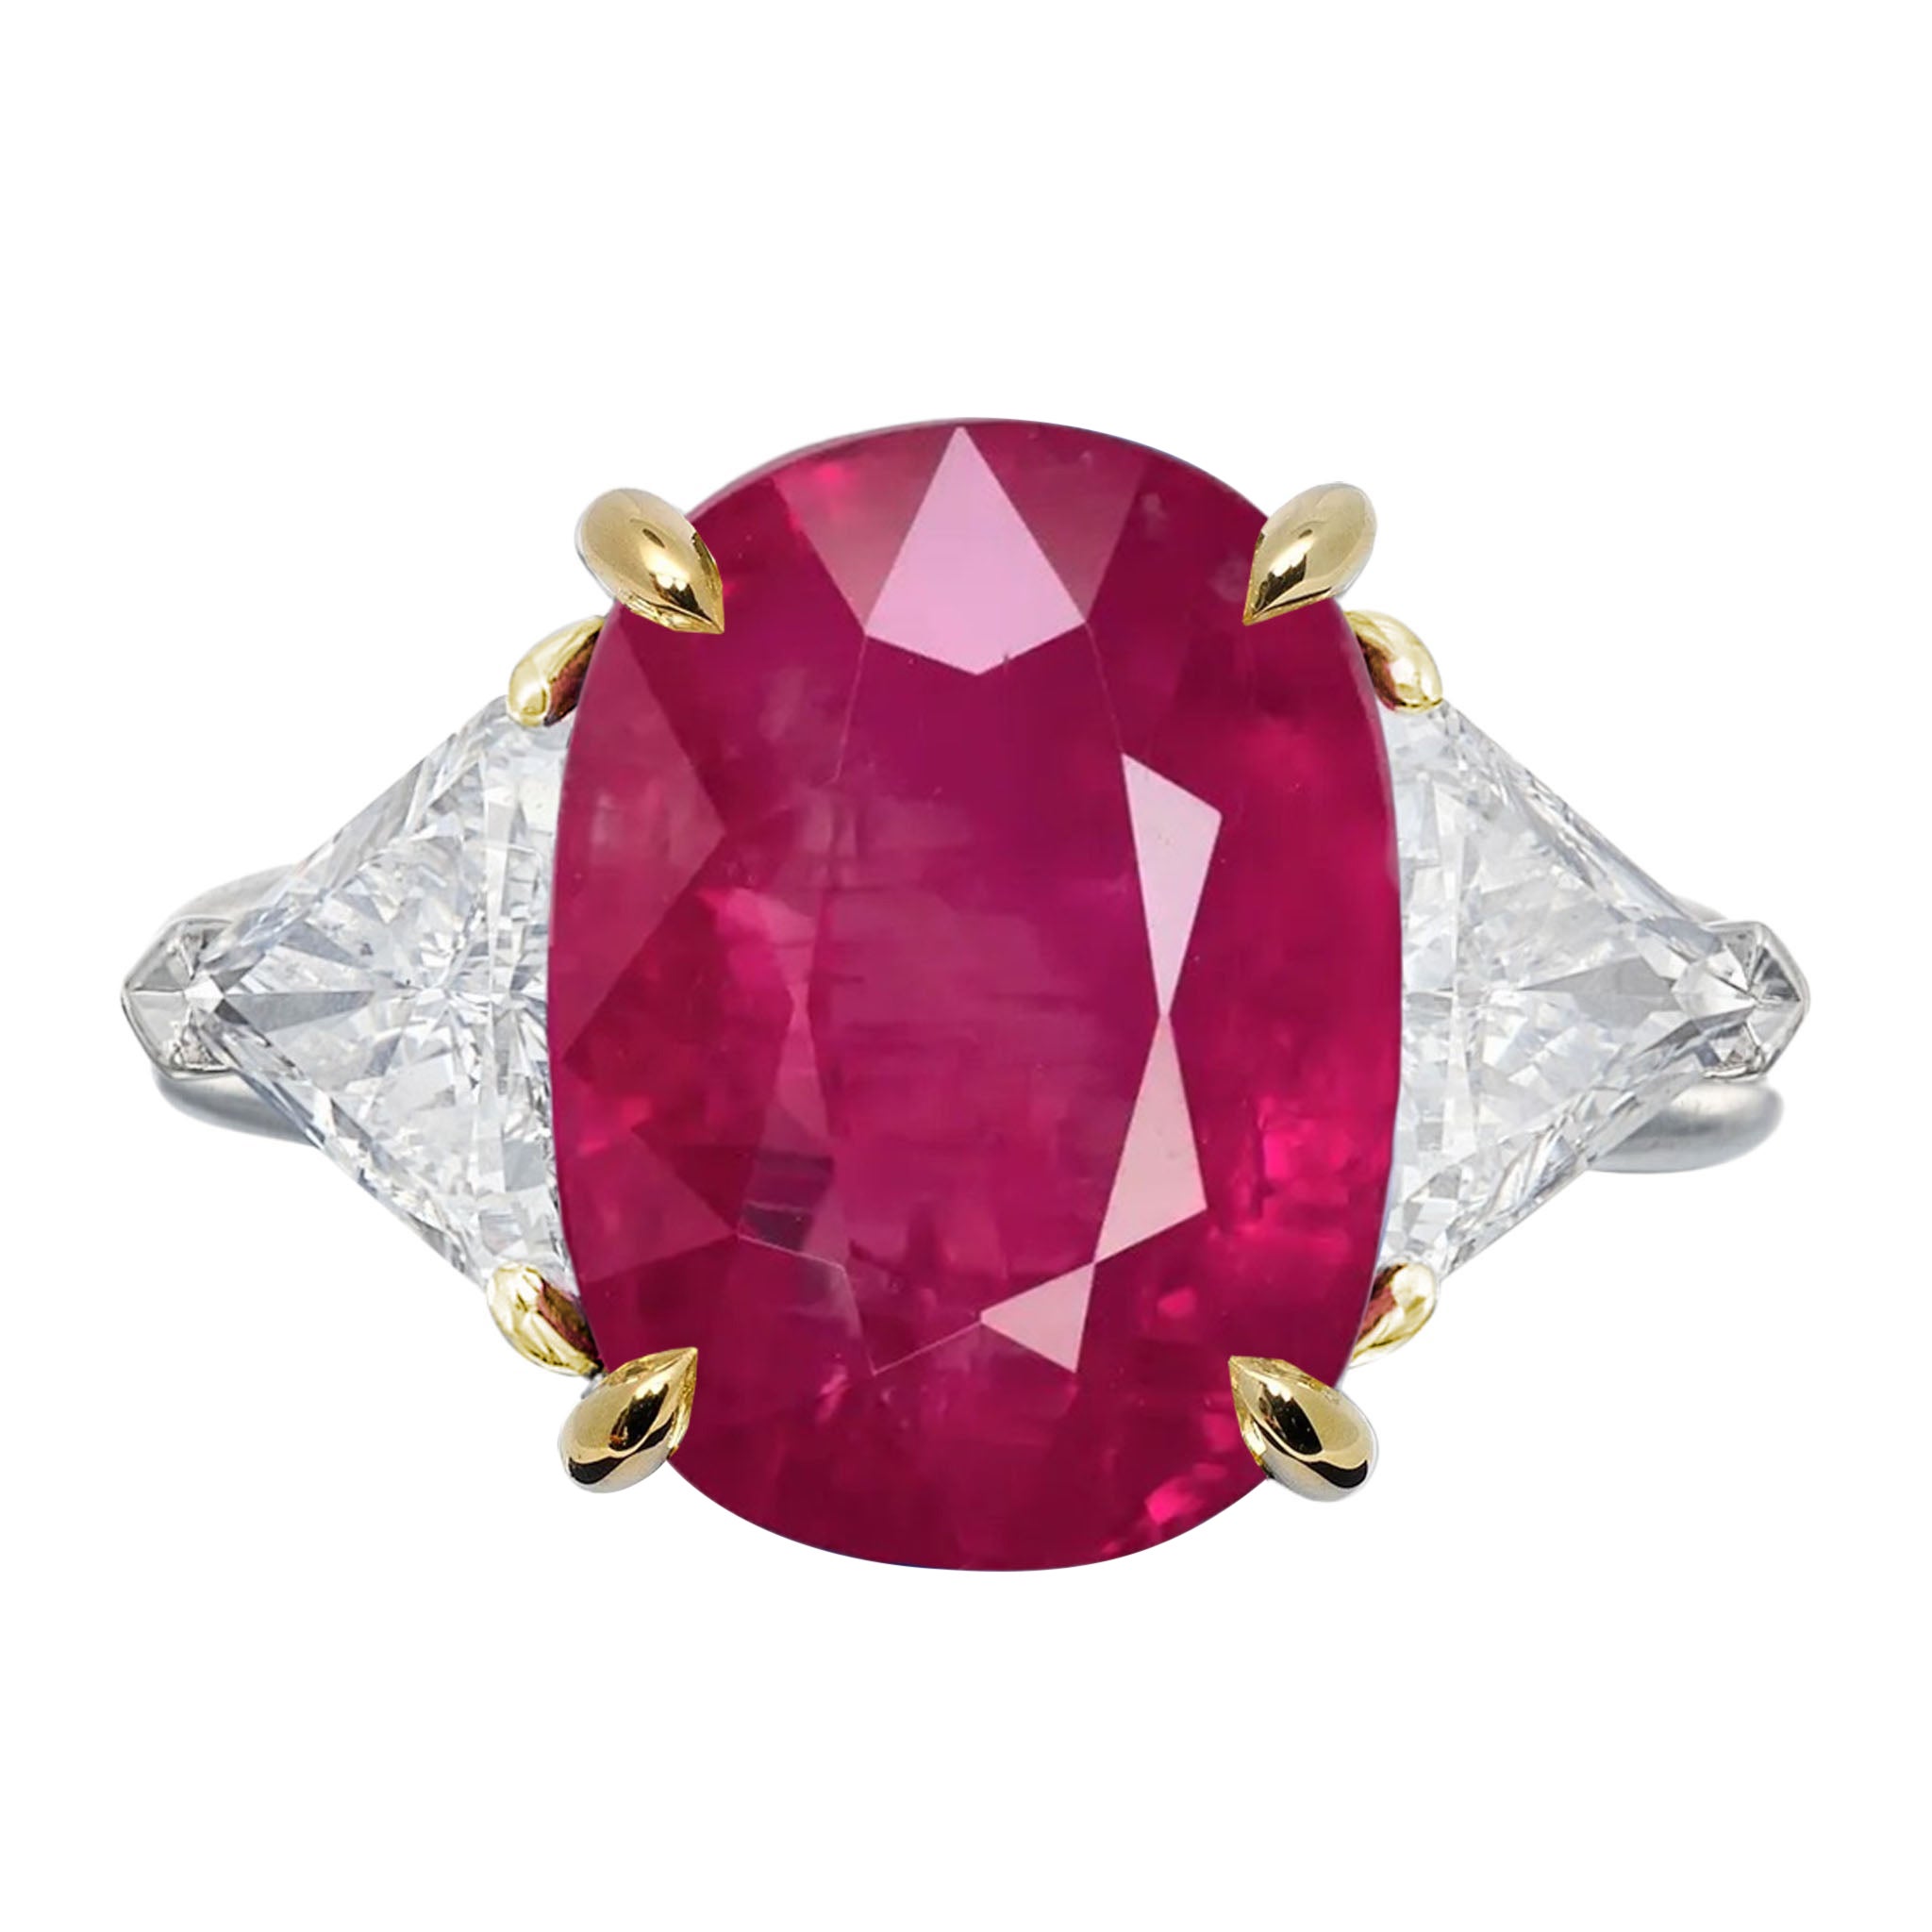 GRS Anillo de diamantes de rubí rojo natural sin tratar ni calentar certificado de 6.72 quilates